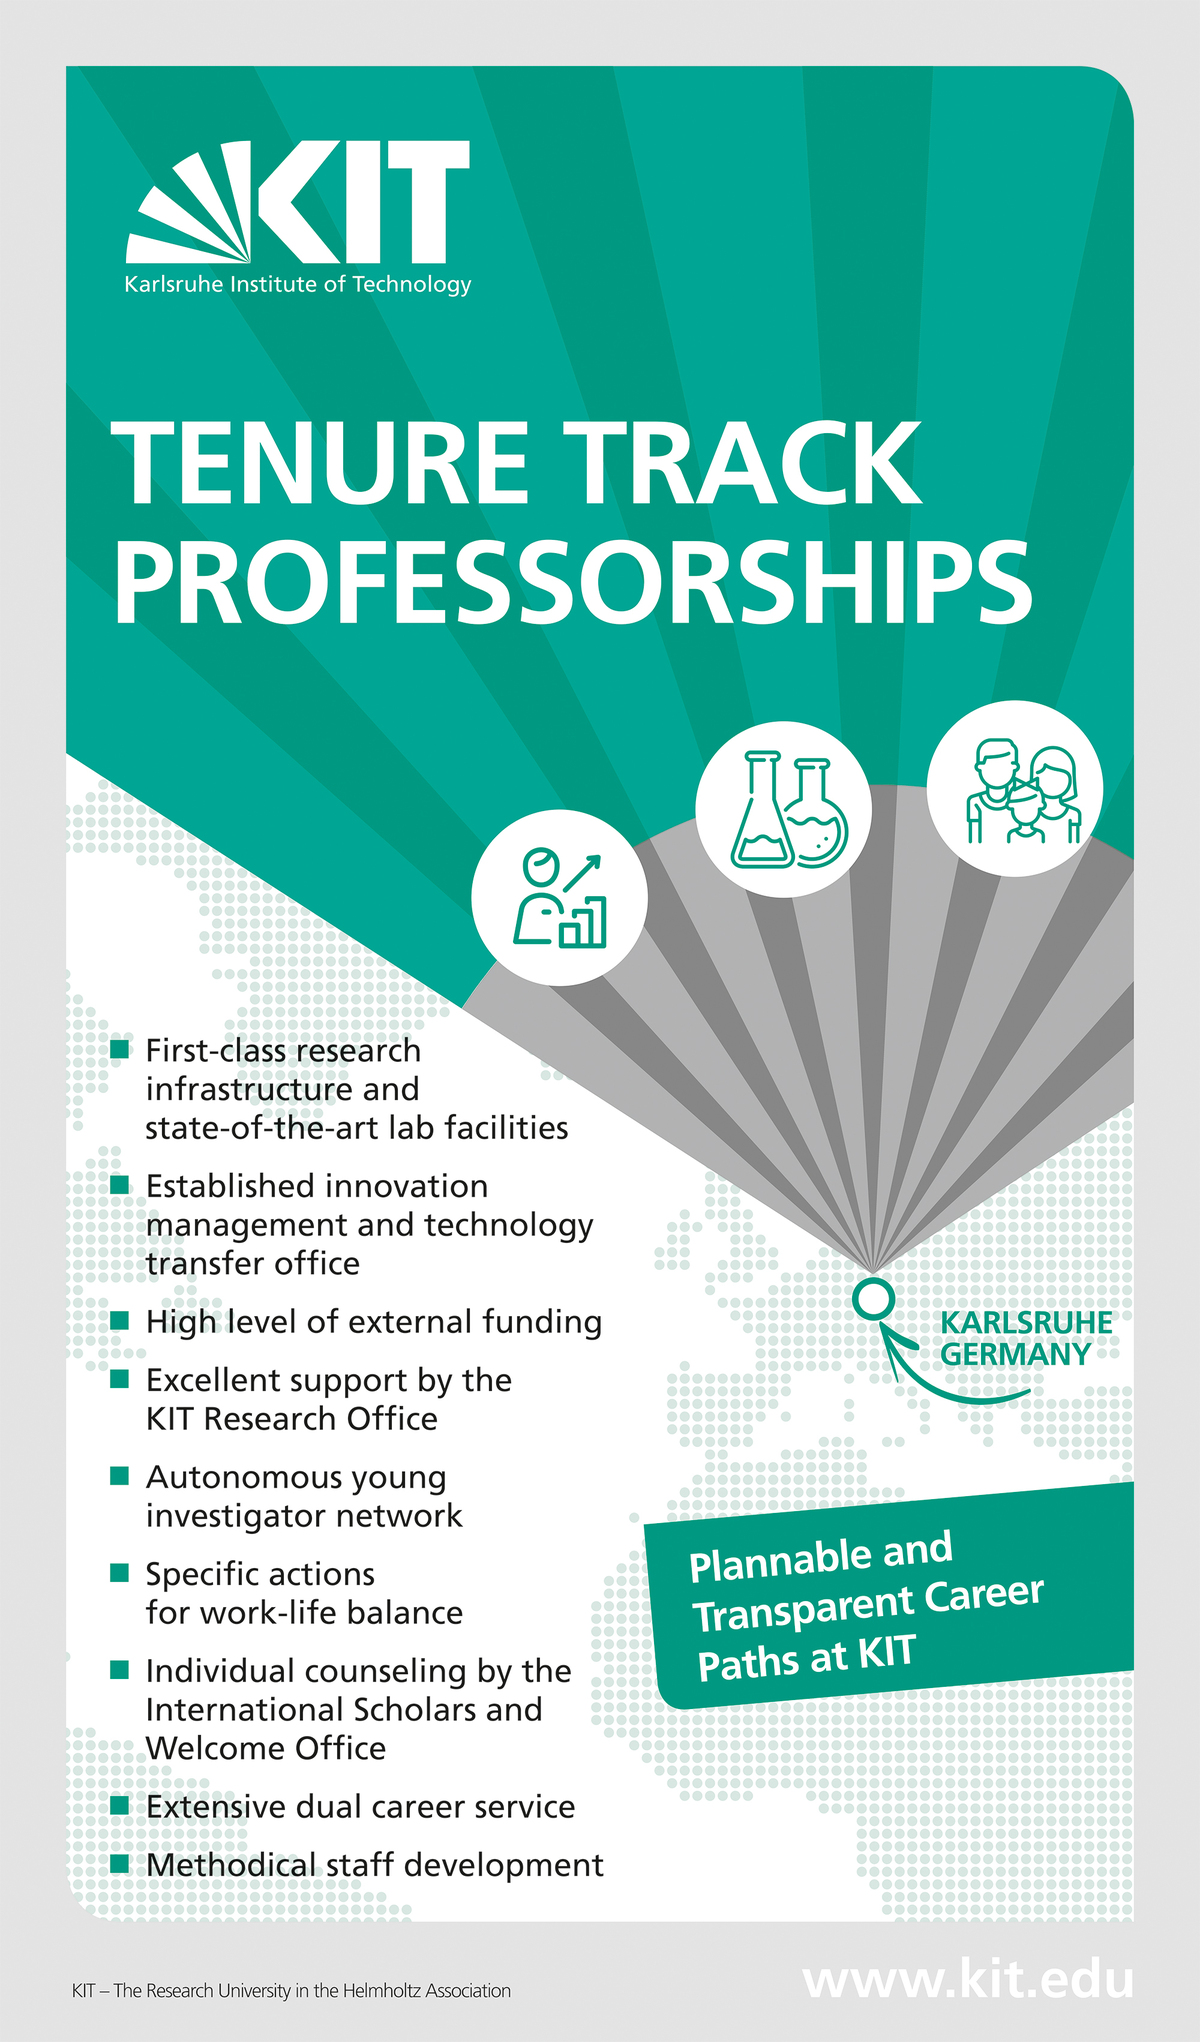 Advantages of a tenure track professorship at KIT